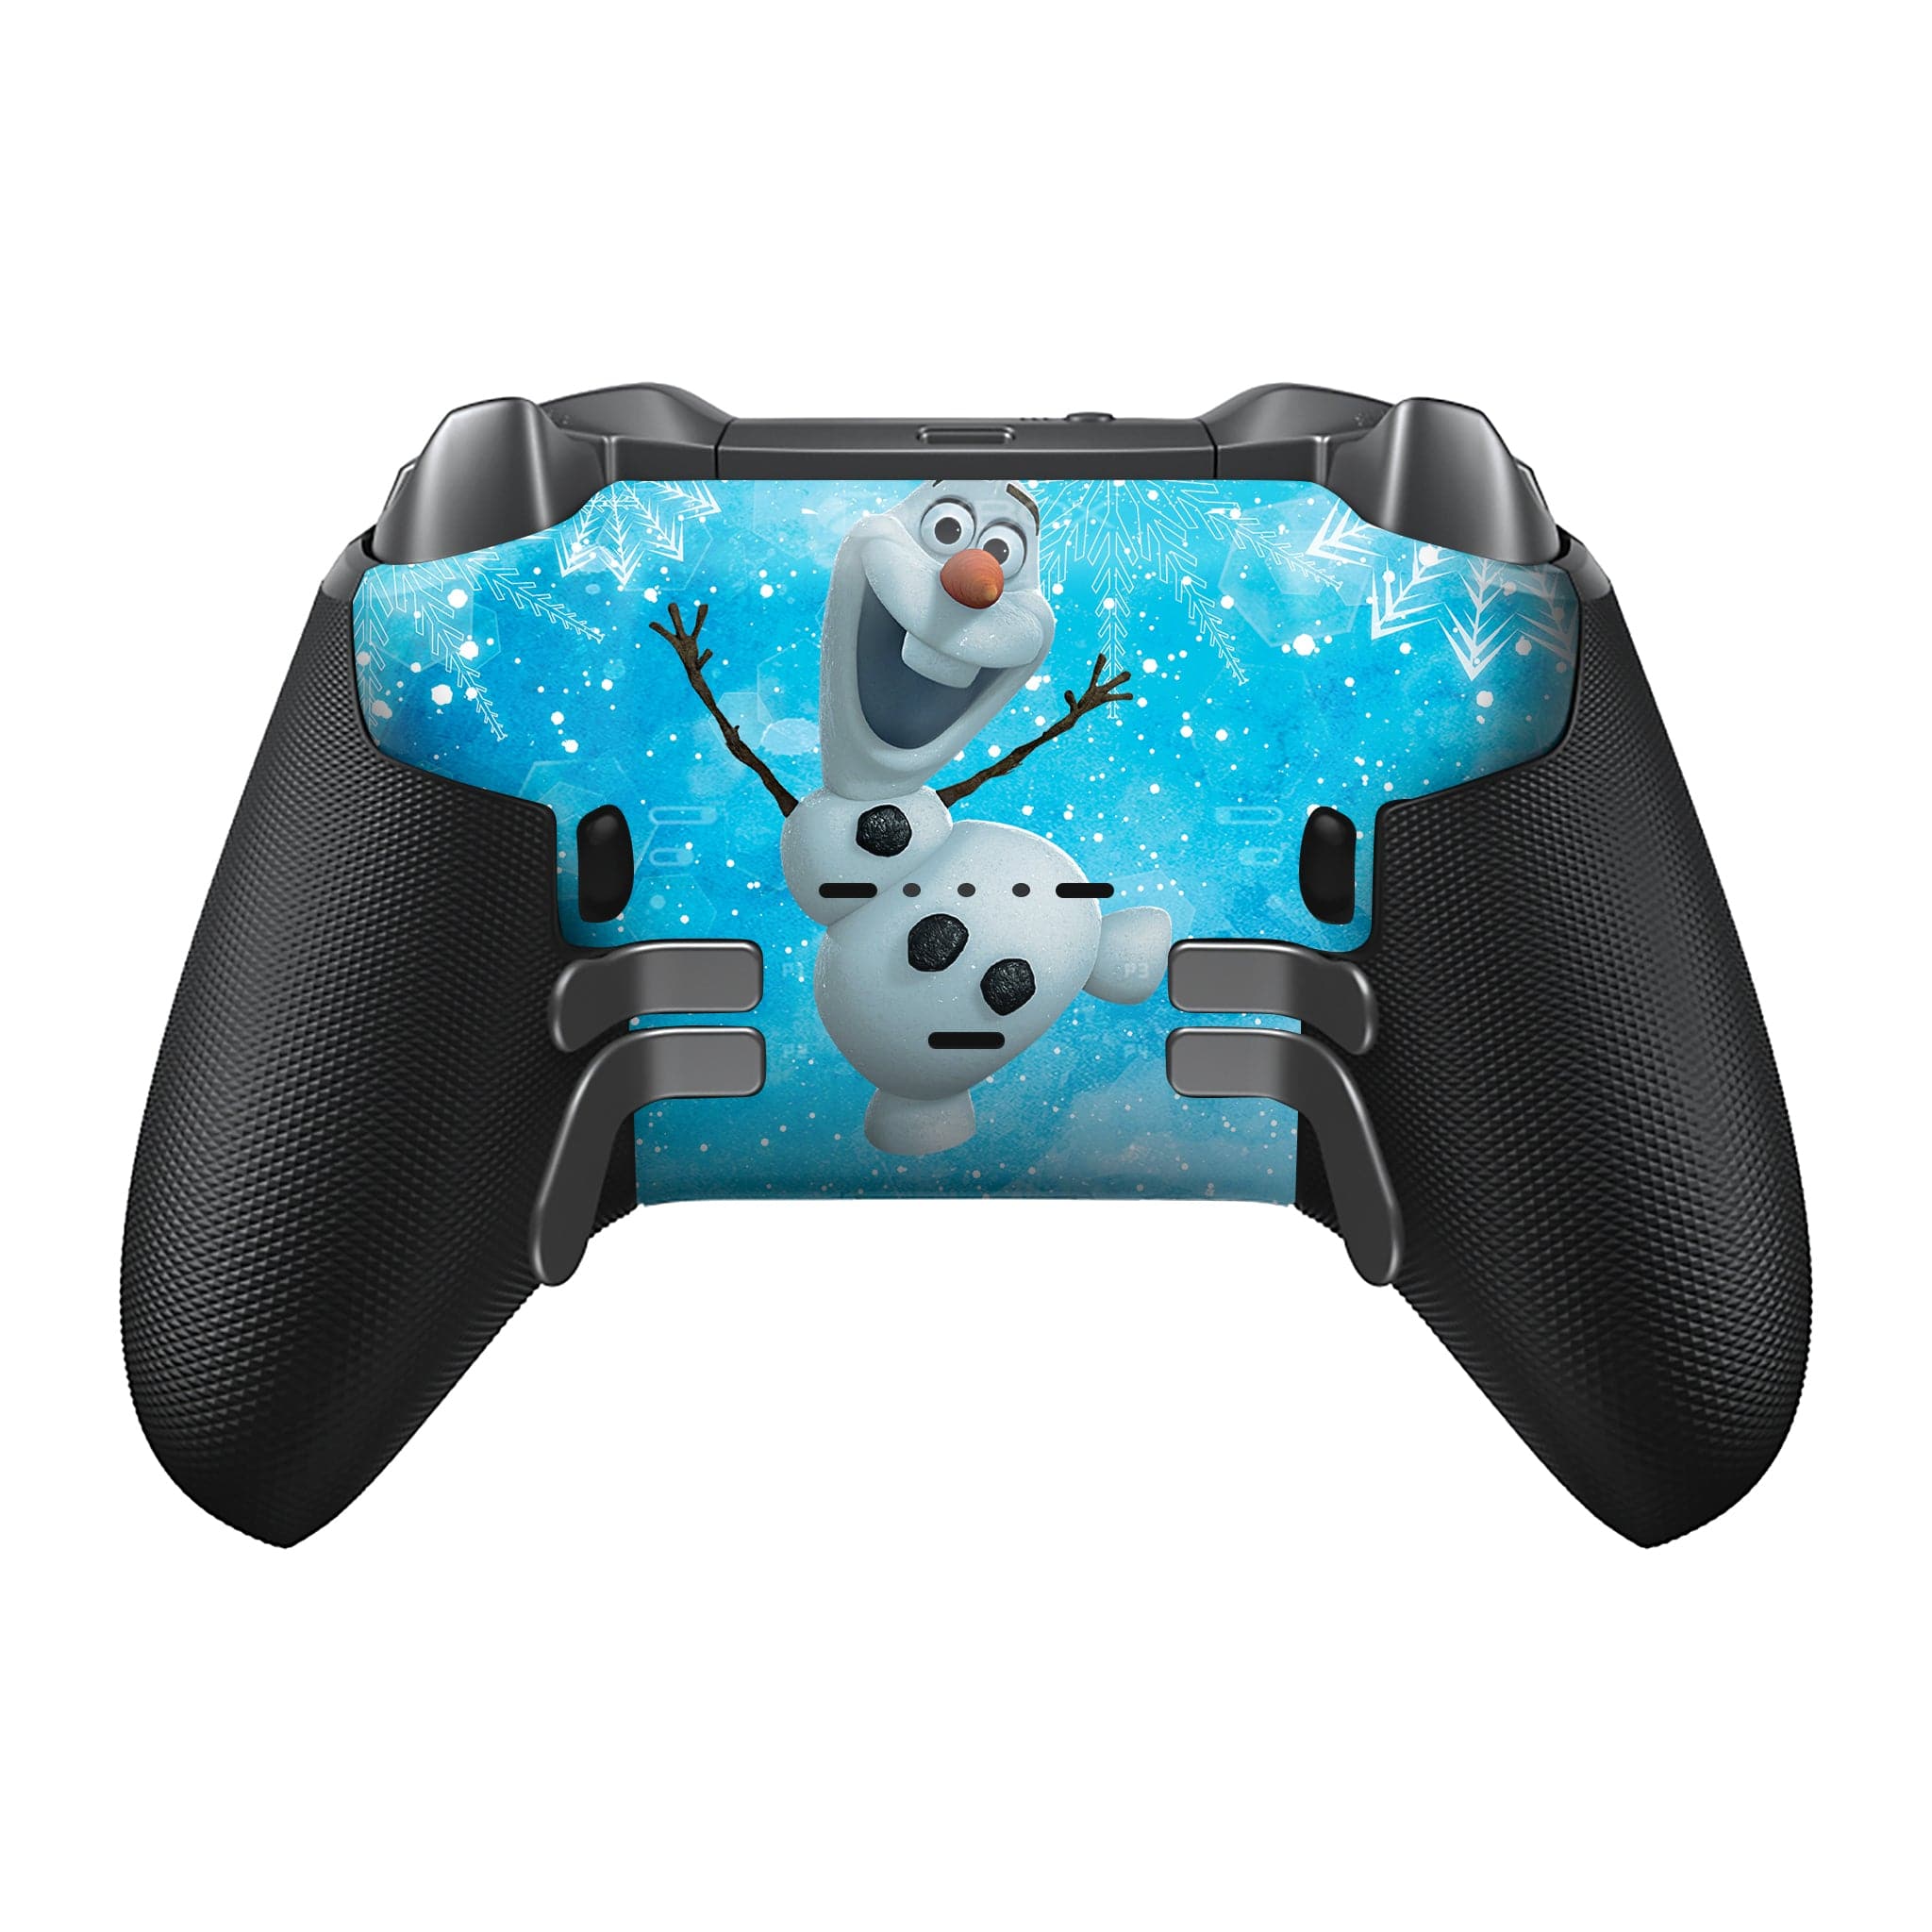 Olaf's Frozen Adventure Xbox Elite Series 2 Controller | New Xbox One